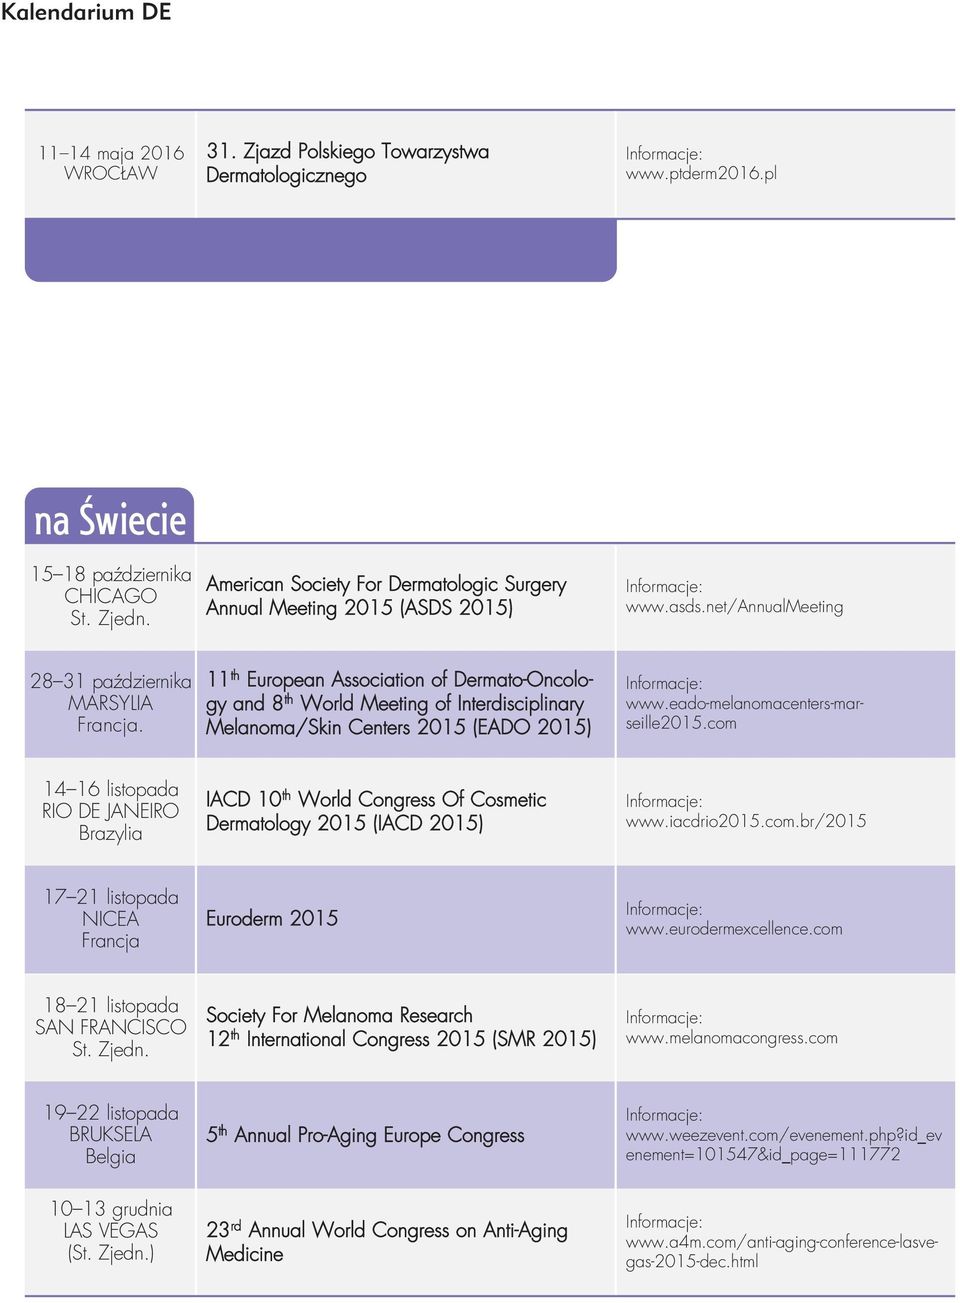 net/annualmeeting 28 31 paêdziernika MARSYLIA Francja. 11 th European Association of Dermato-Oncology and 8 th World Meeting of Interdisciplinary Melanoma/Skin Centers 2015 (EADO 2015) www.